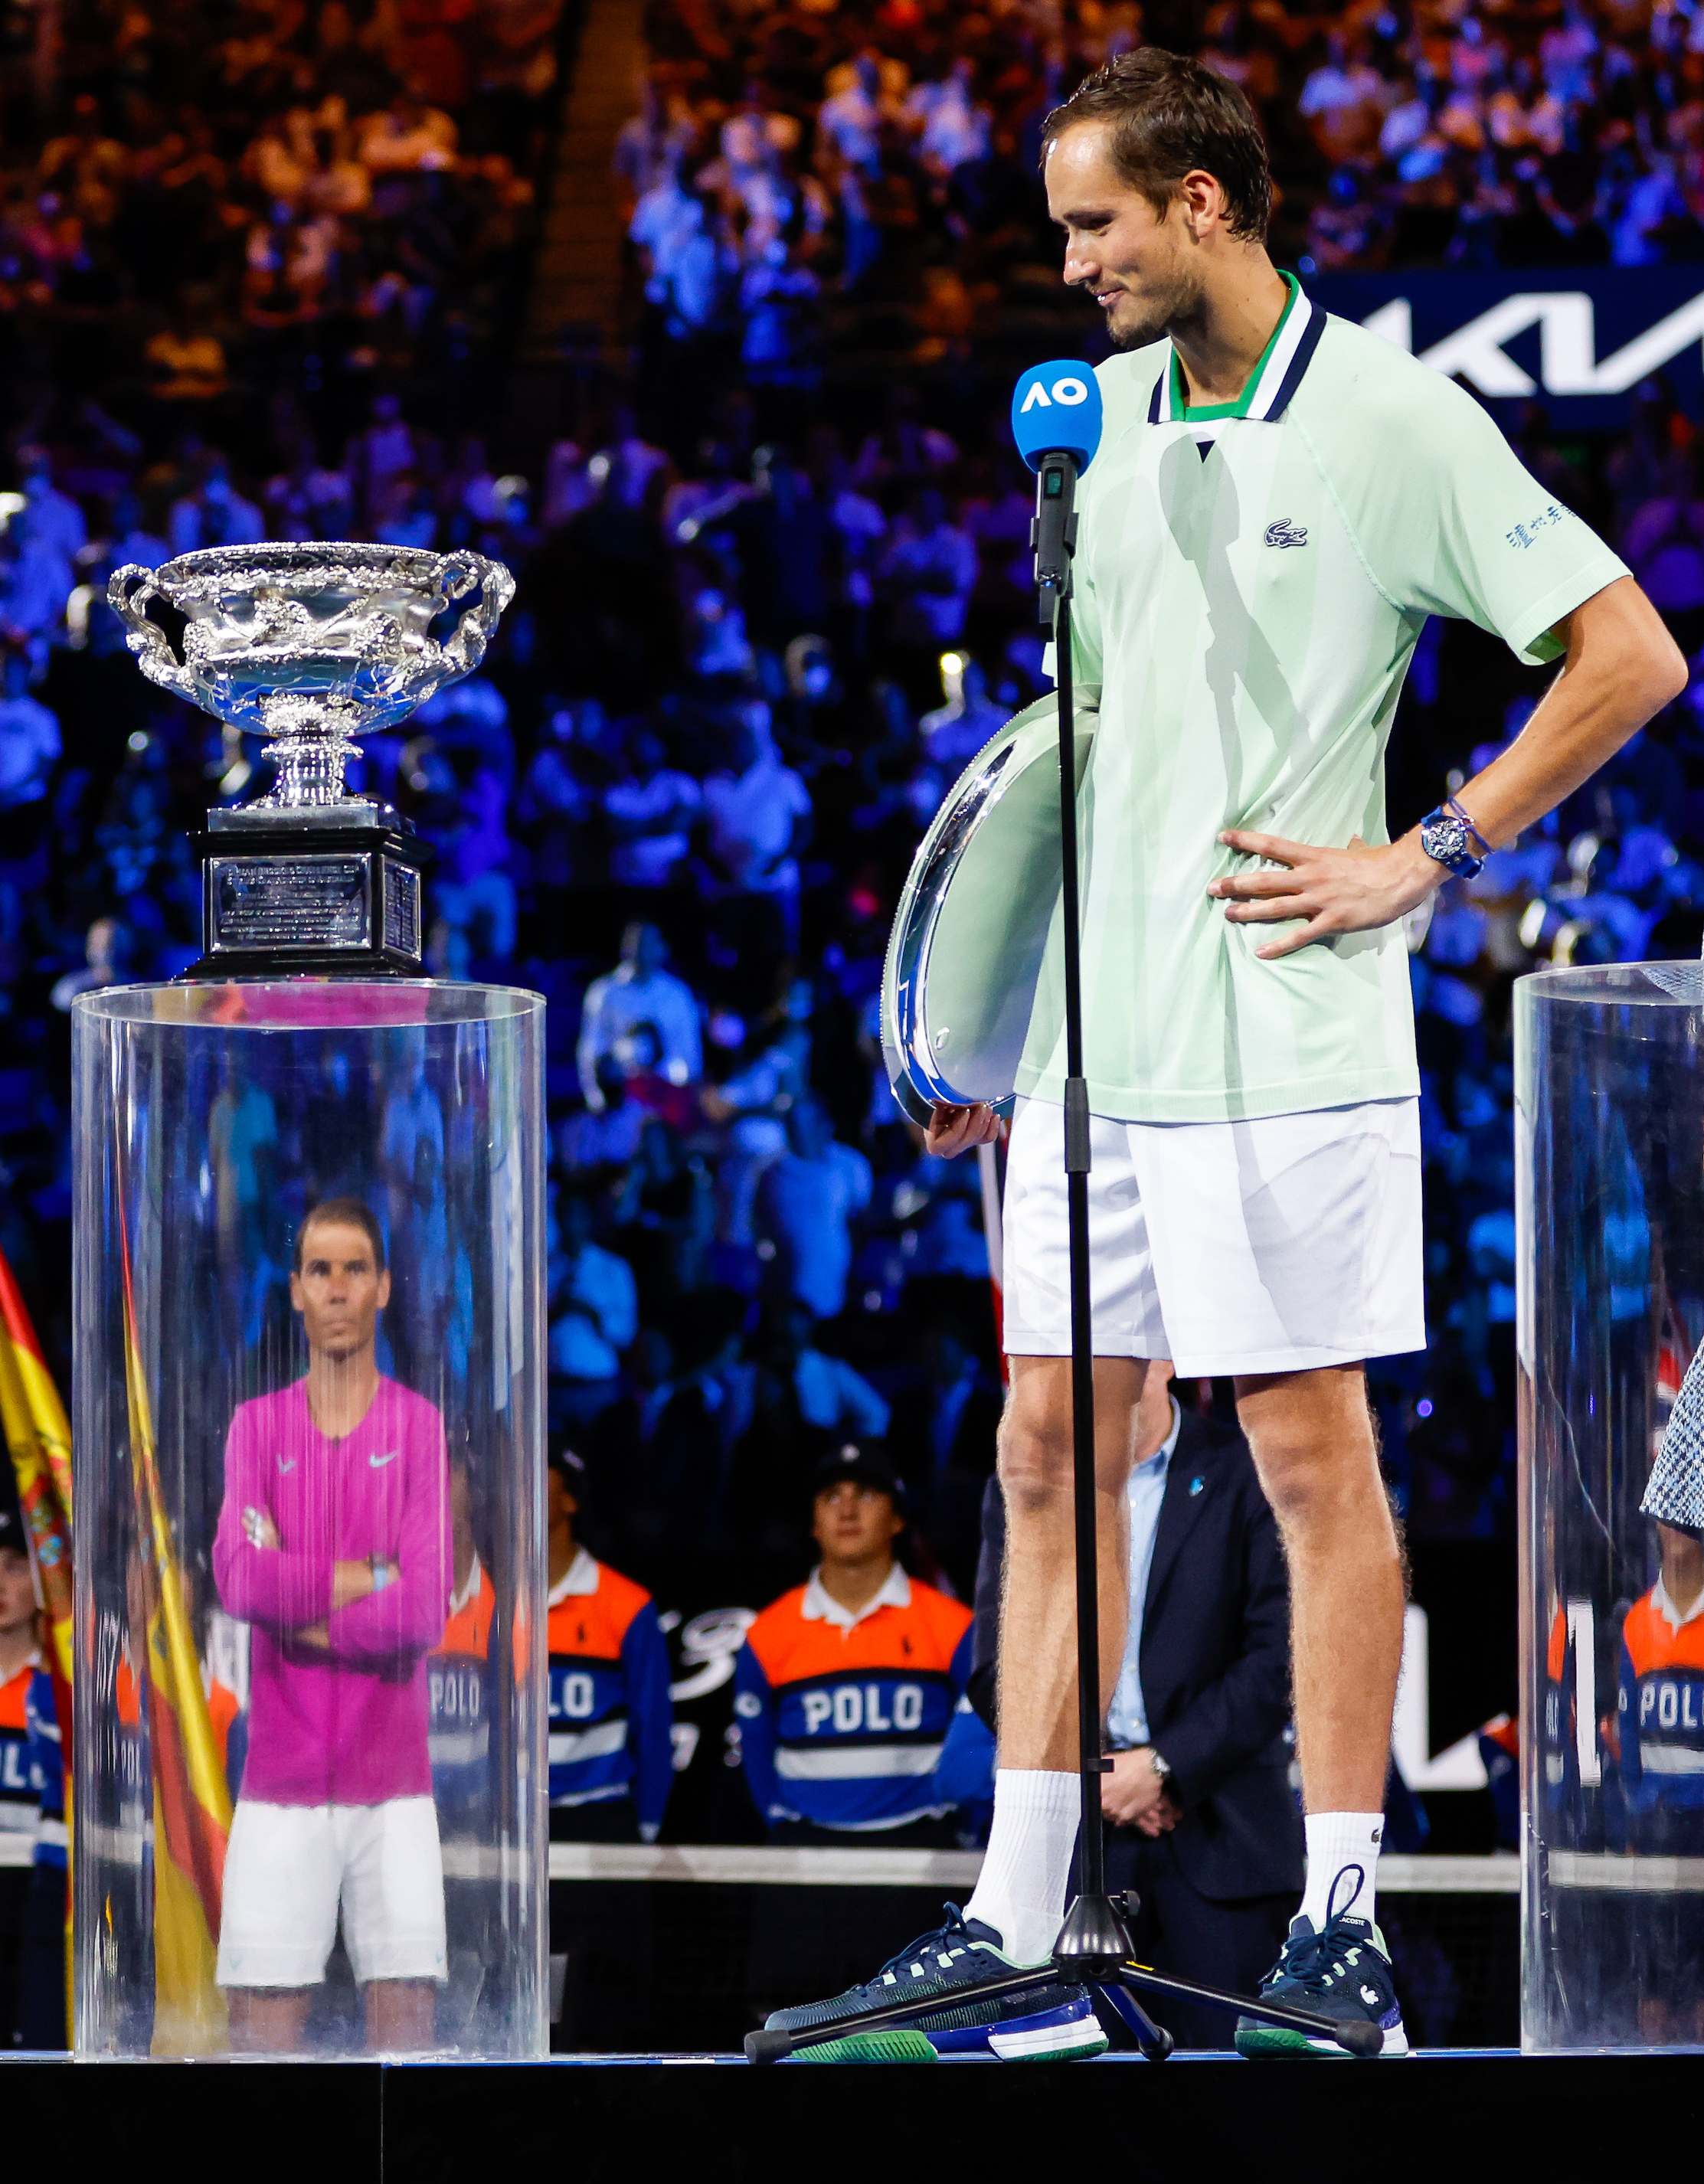 Daniil Medvedev gave a speech at the Australian Open finals awards ceremony